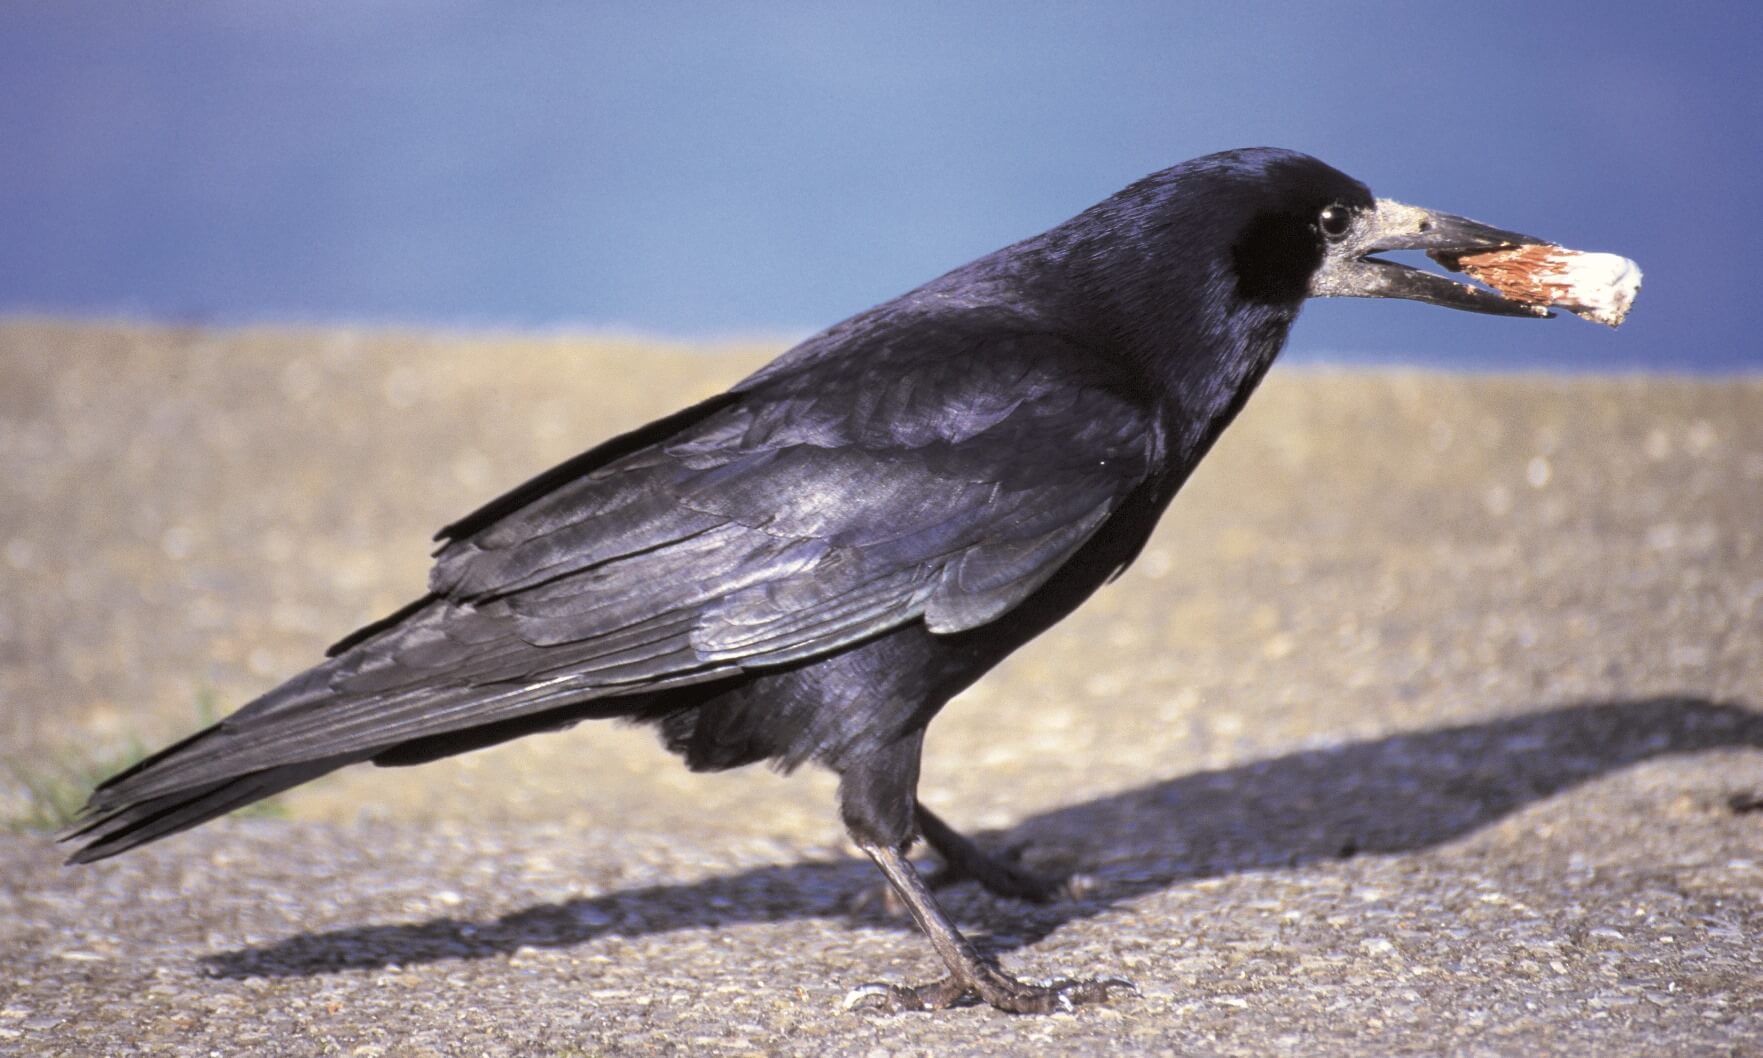 Crow holding food in its beak